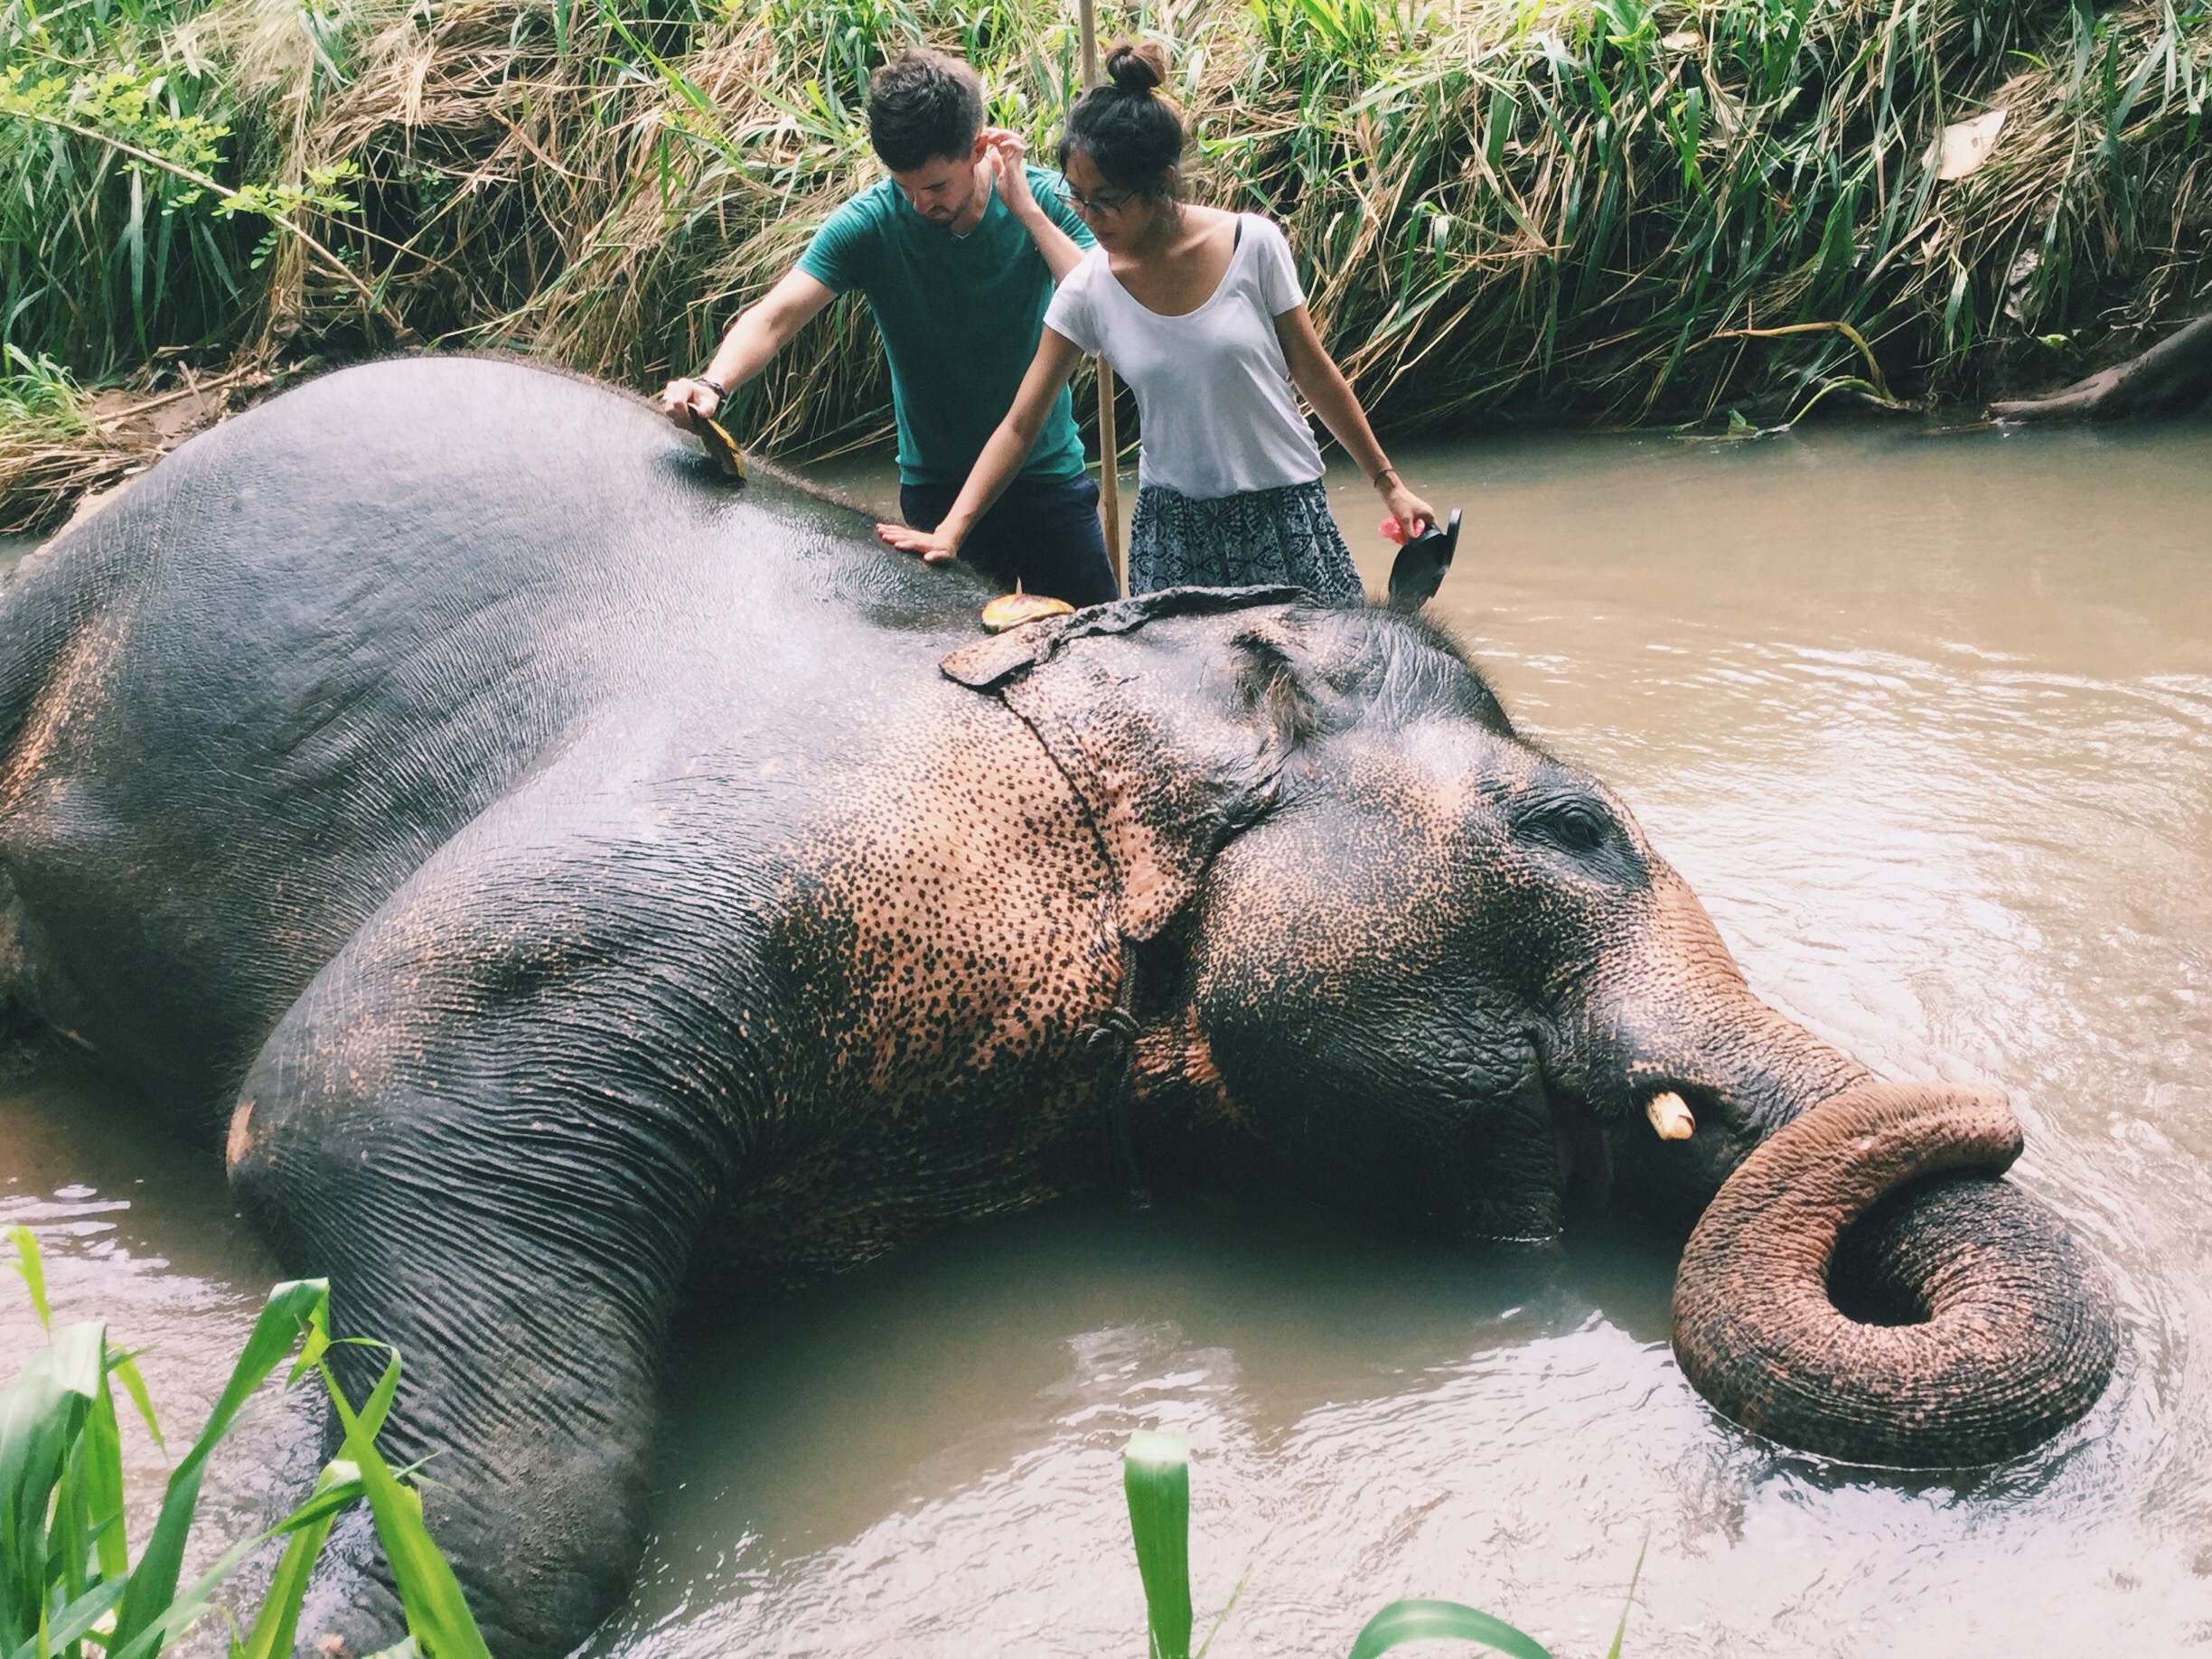 Washing Elephants in Sri Lanka